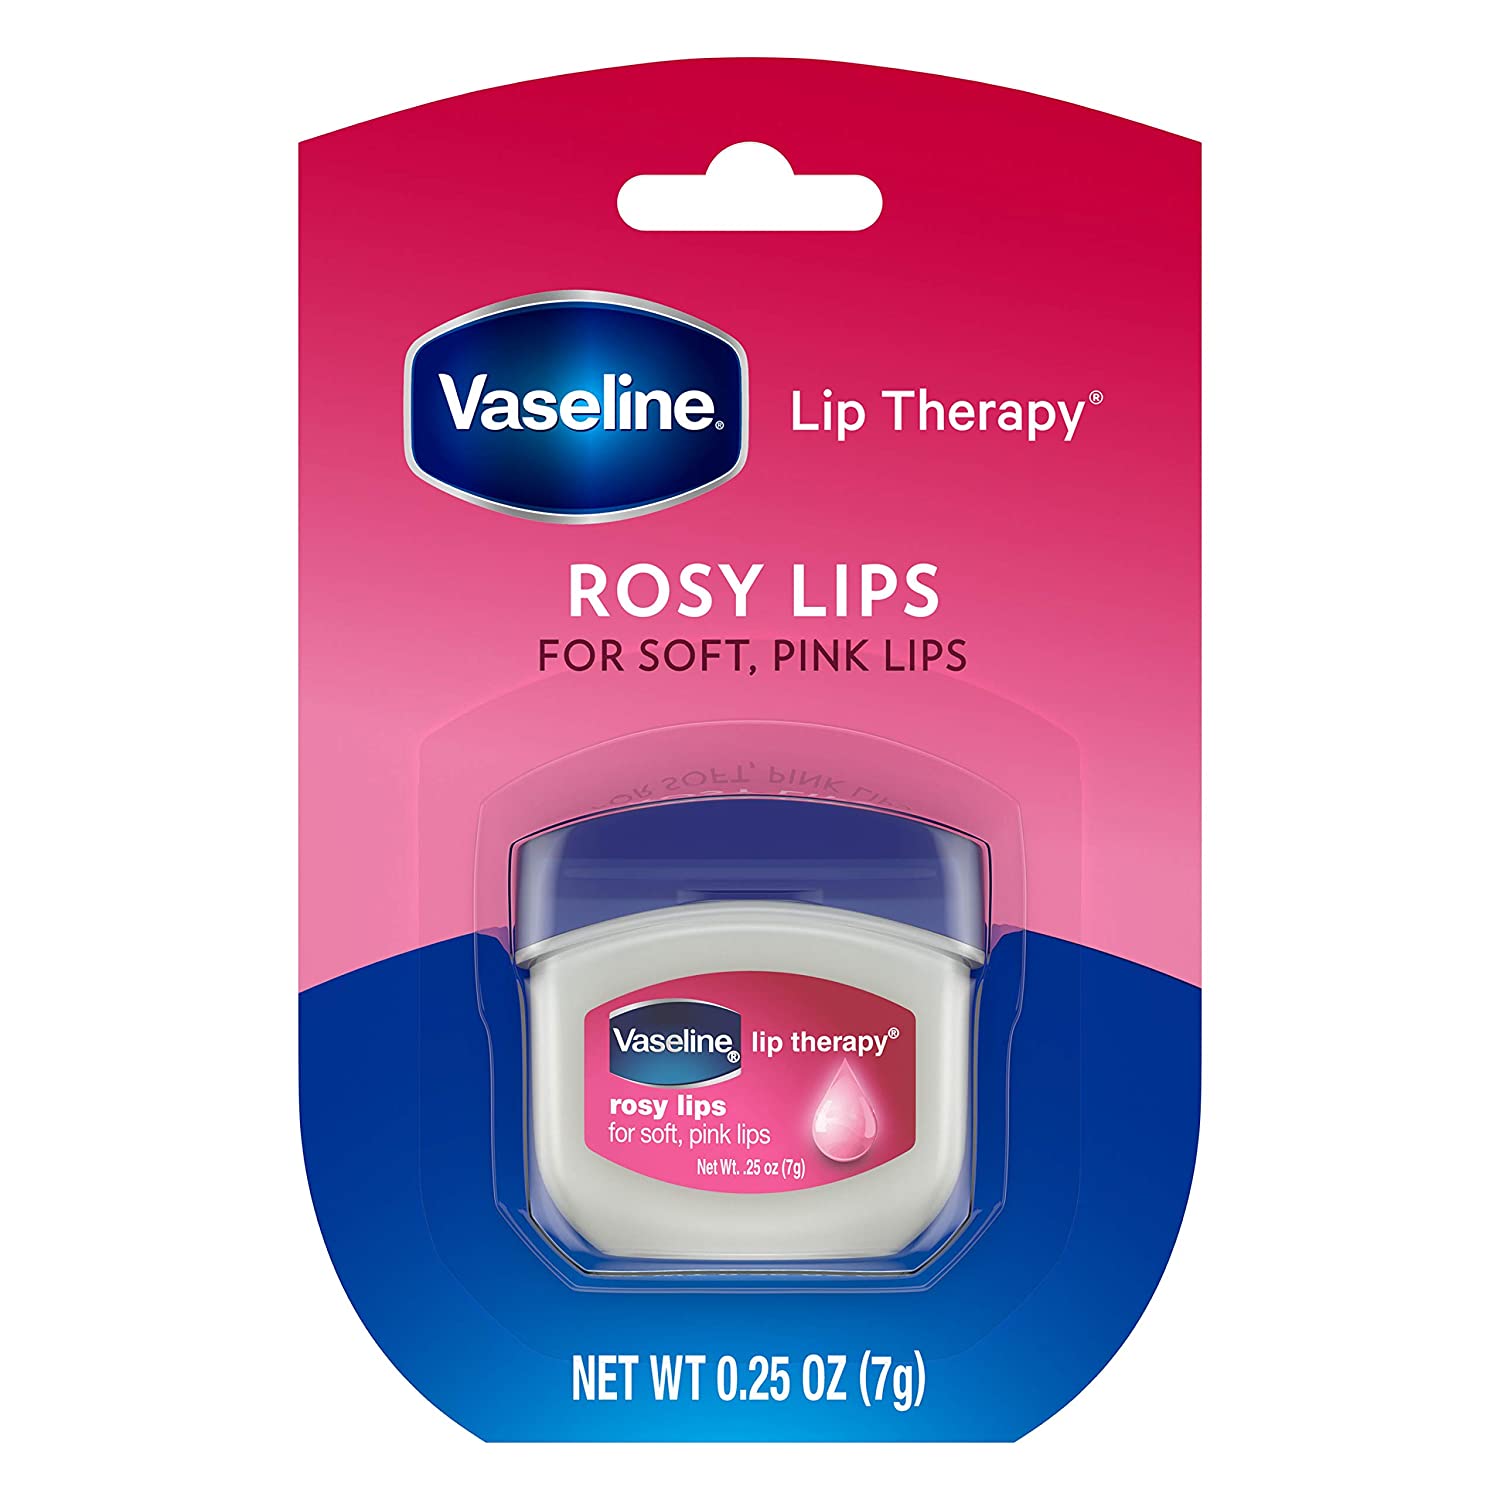 Vaseline-Lip-Therapy-Mini-Rp-26.00000